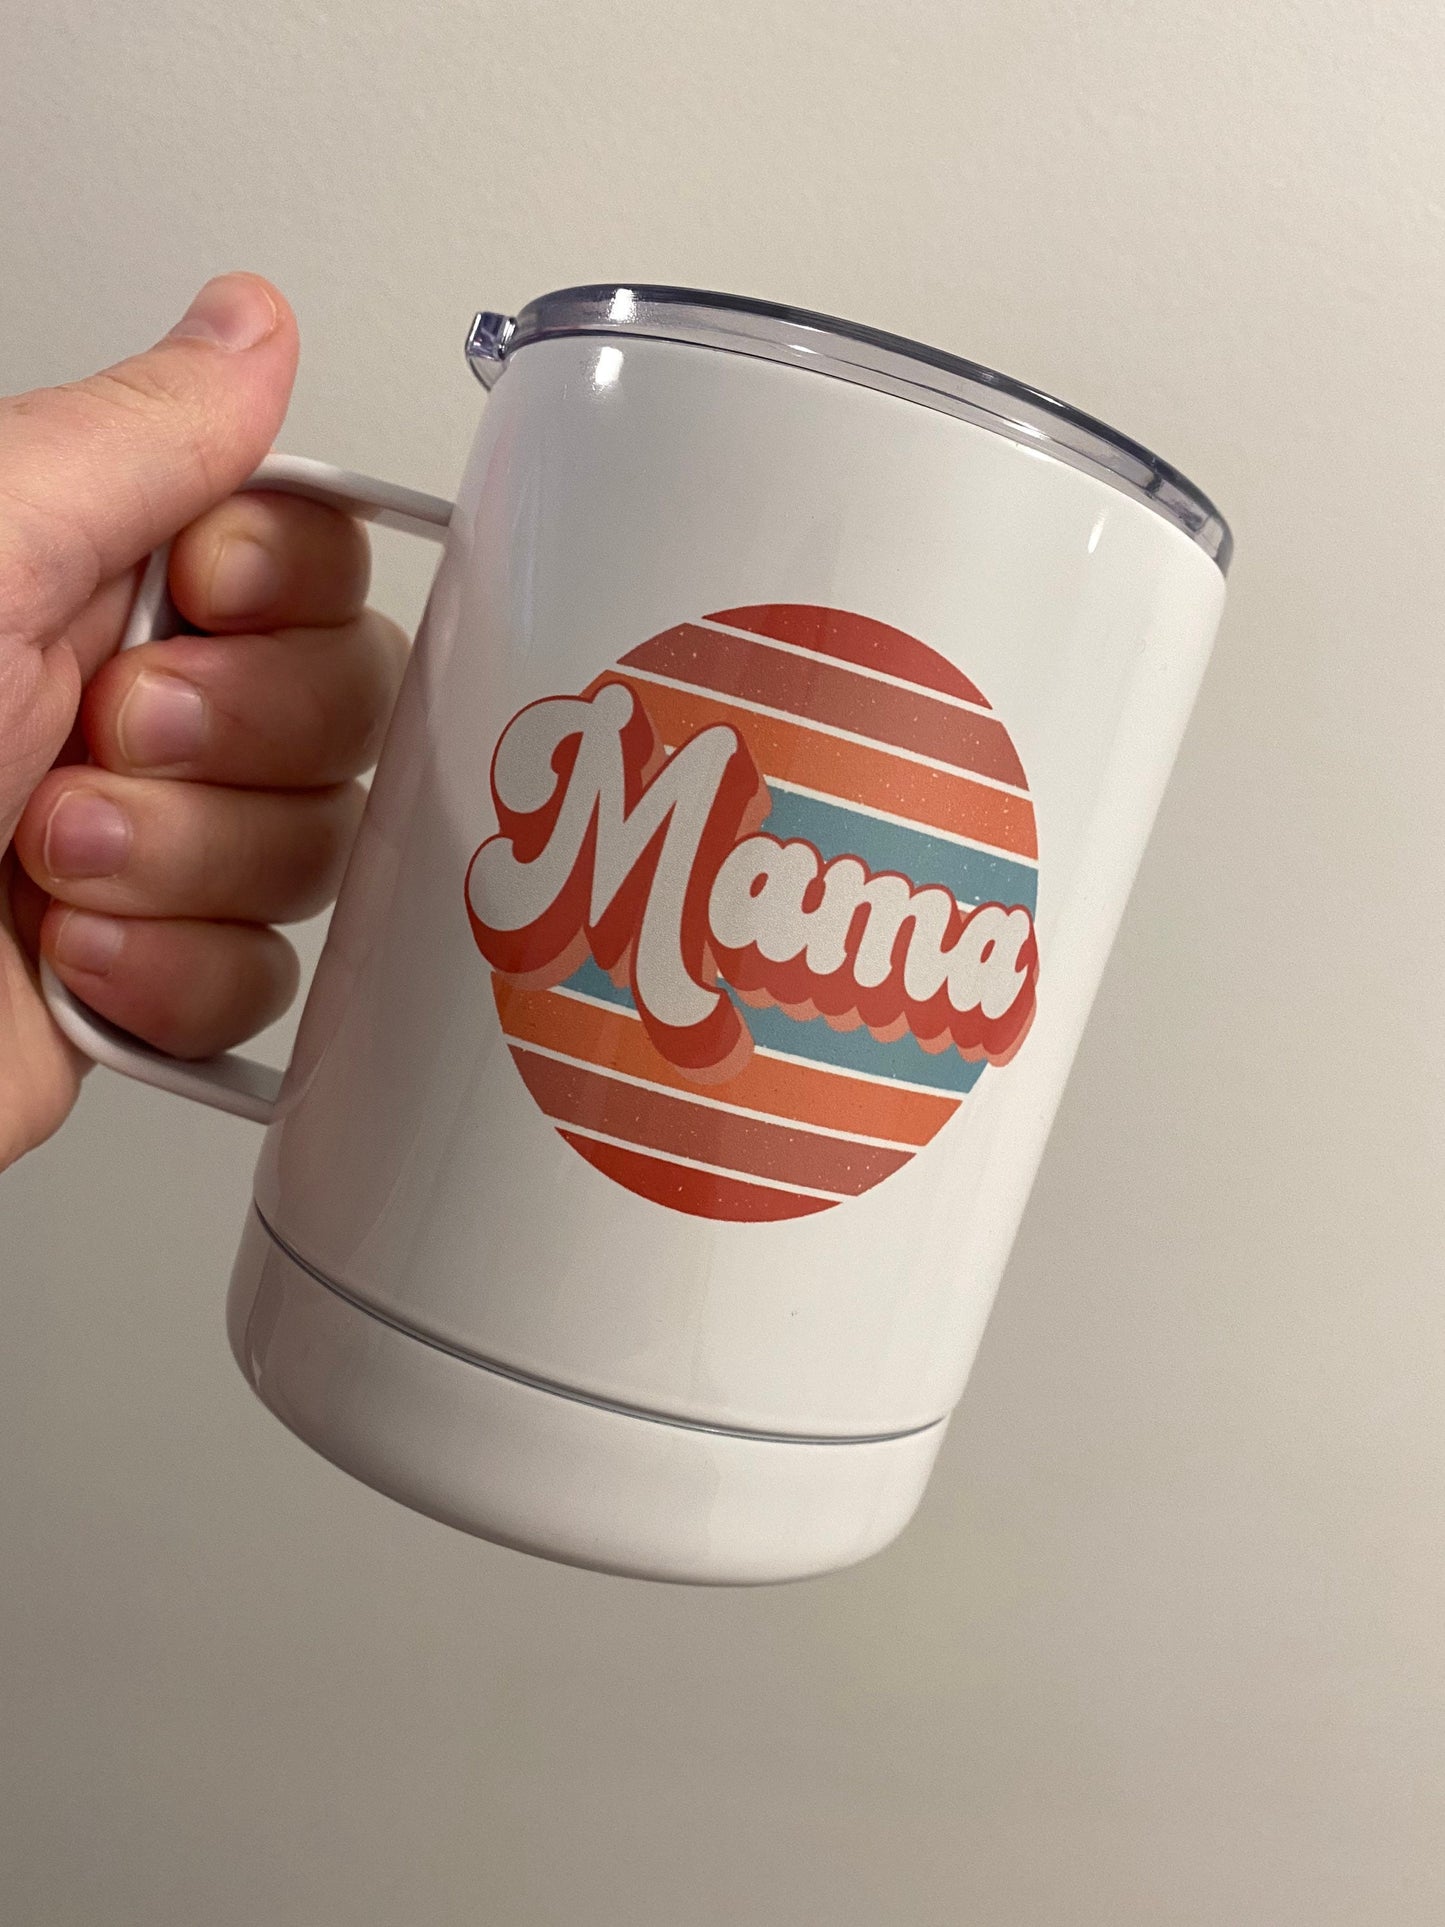 Mama Retro Style Insulated Travel Mug